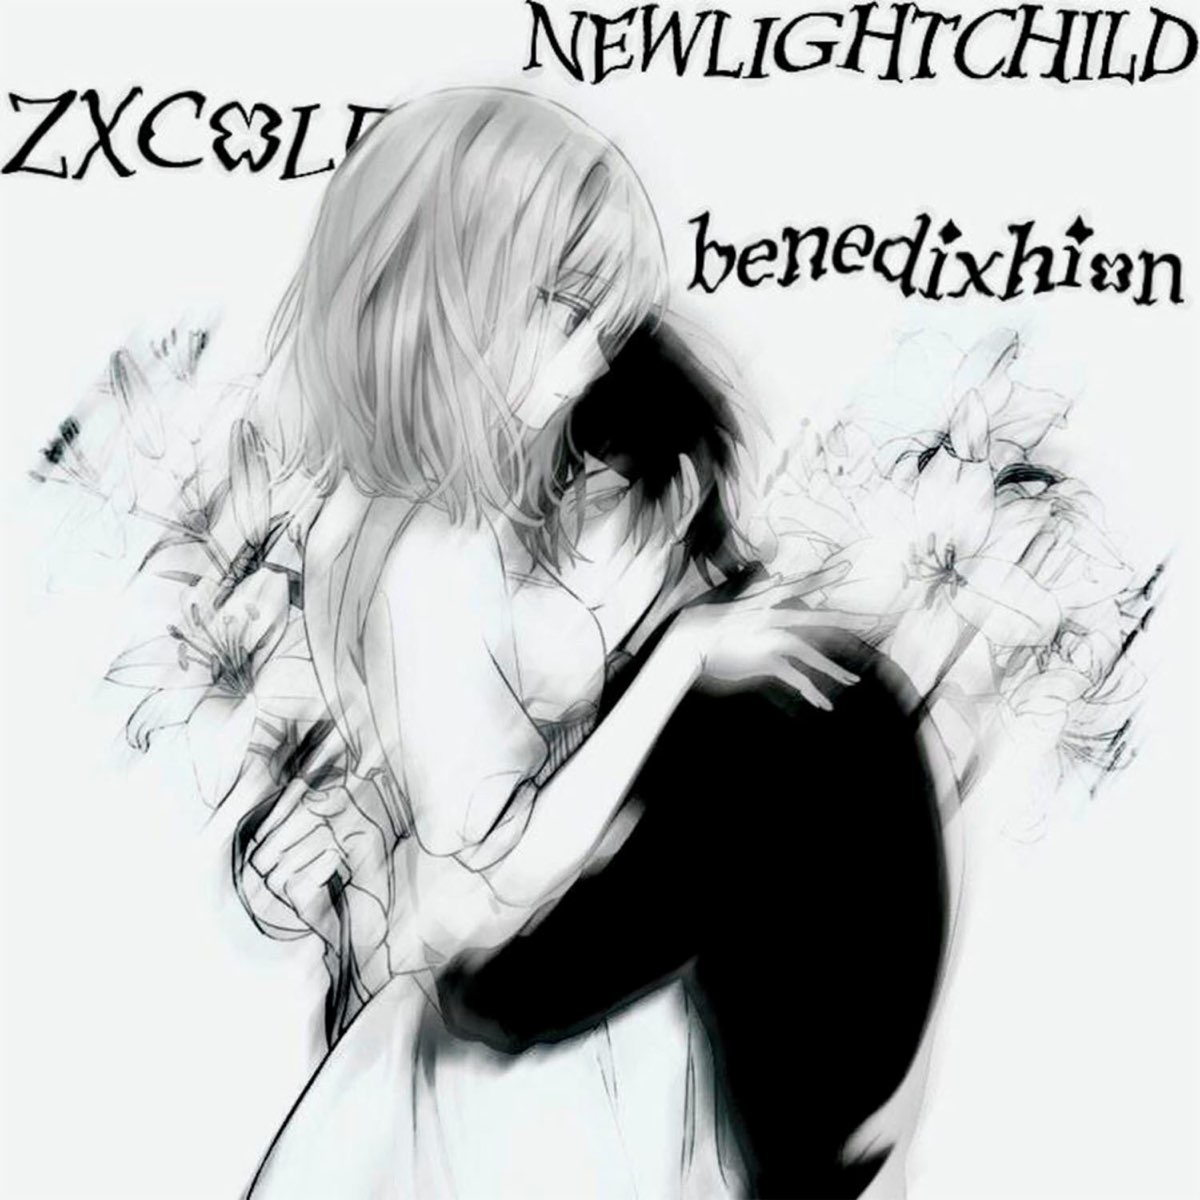 Newlightchild amore. Kickback newlightchild. Newlightchild биография. Newlightchild сейчас. Newlightchild лицо.